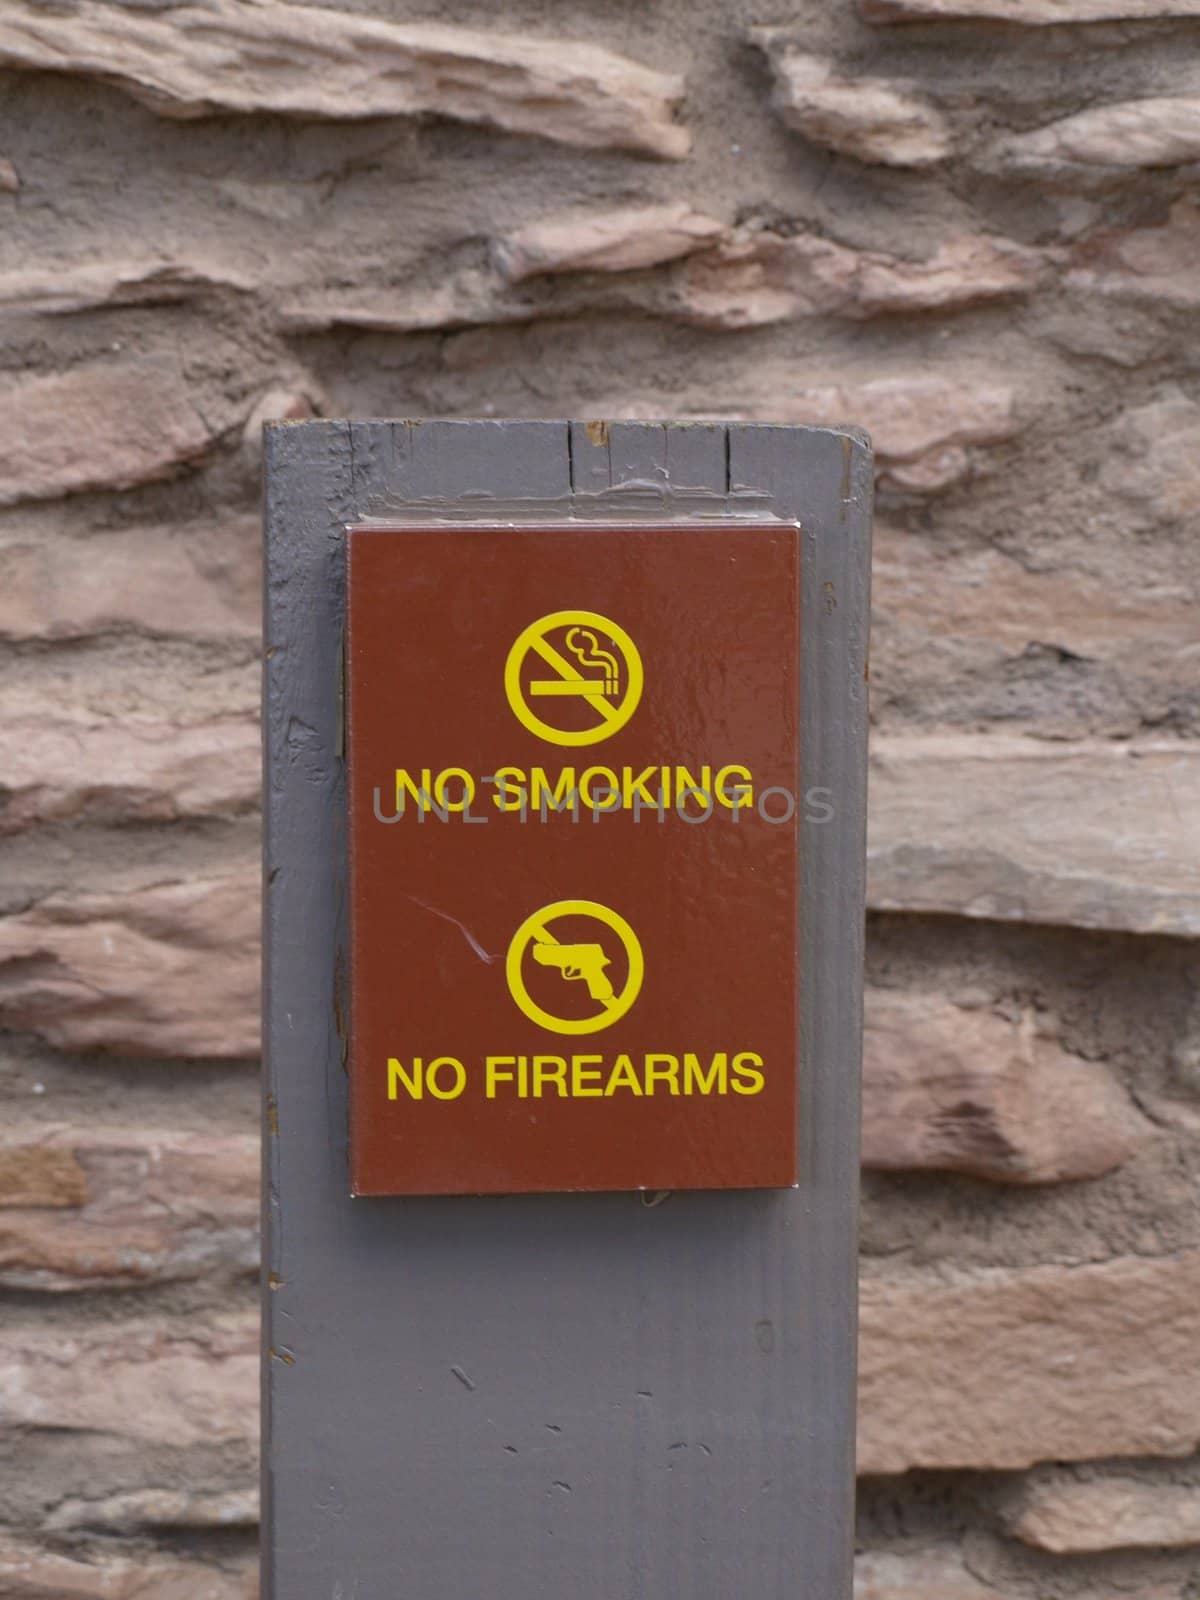 No smoking and no firearms sign